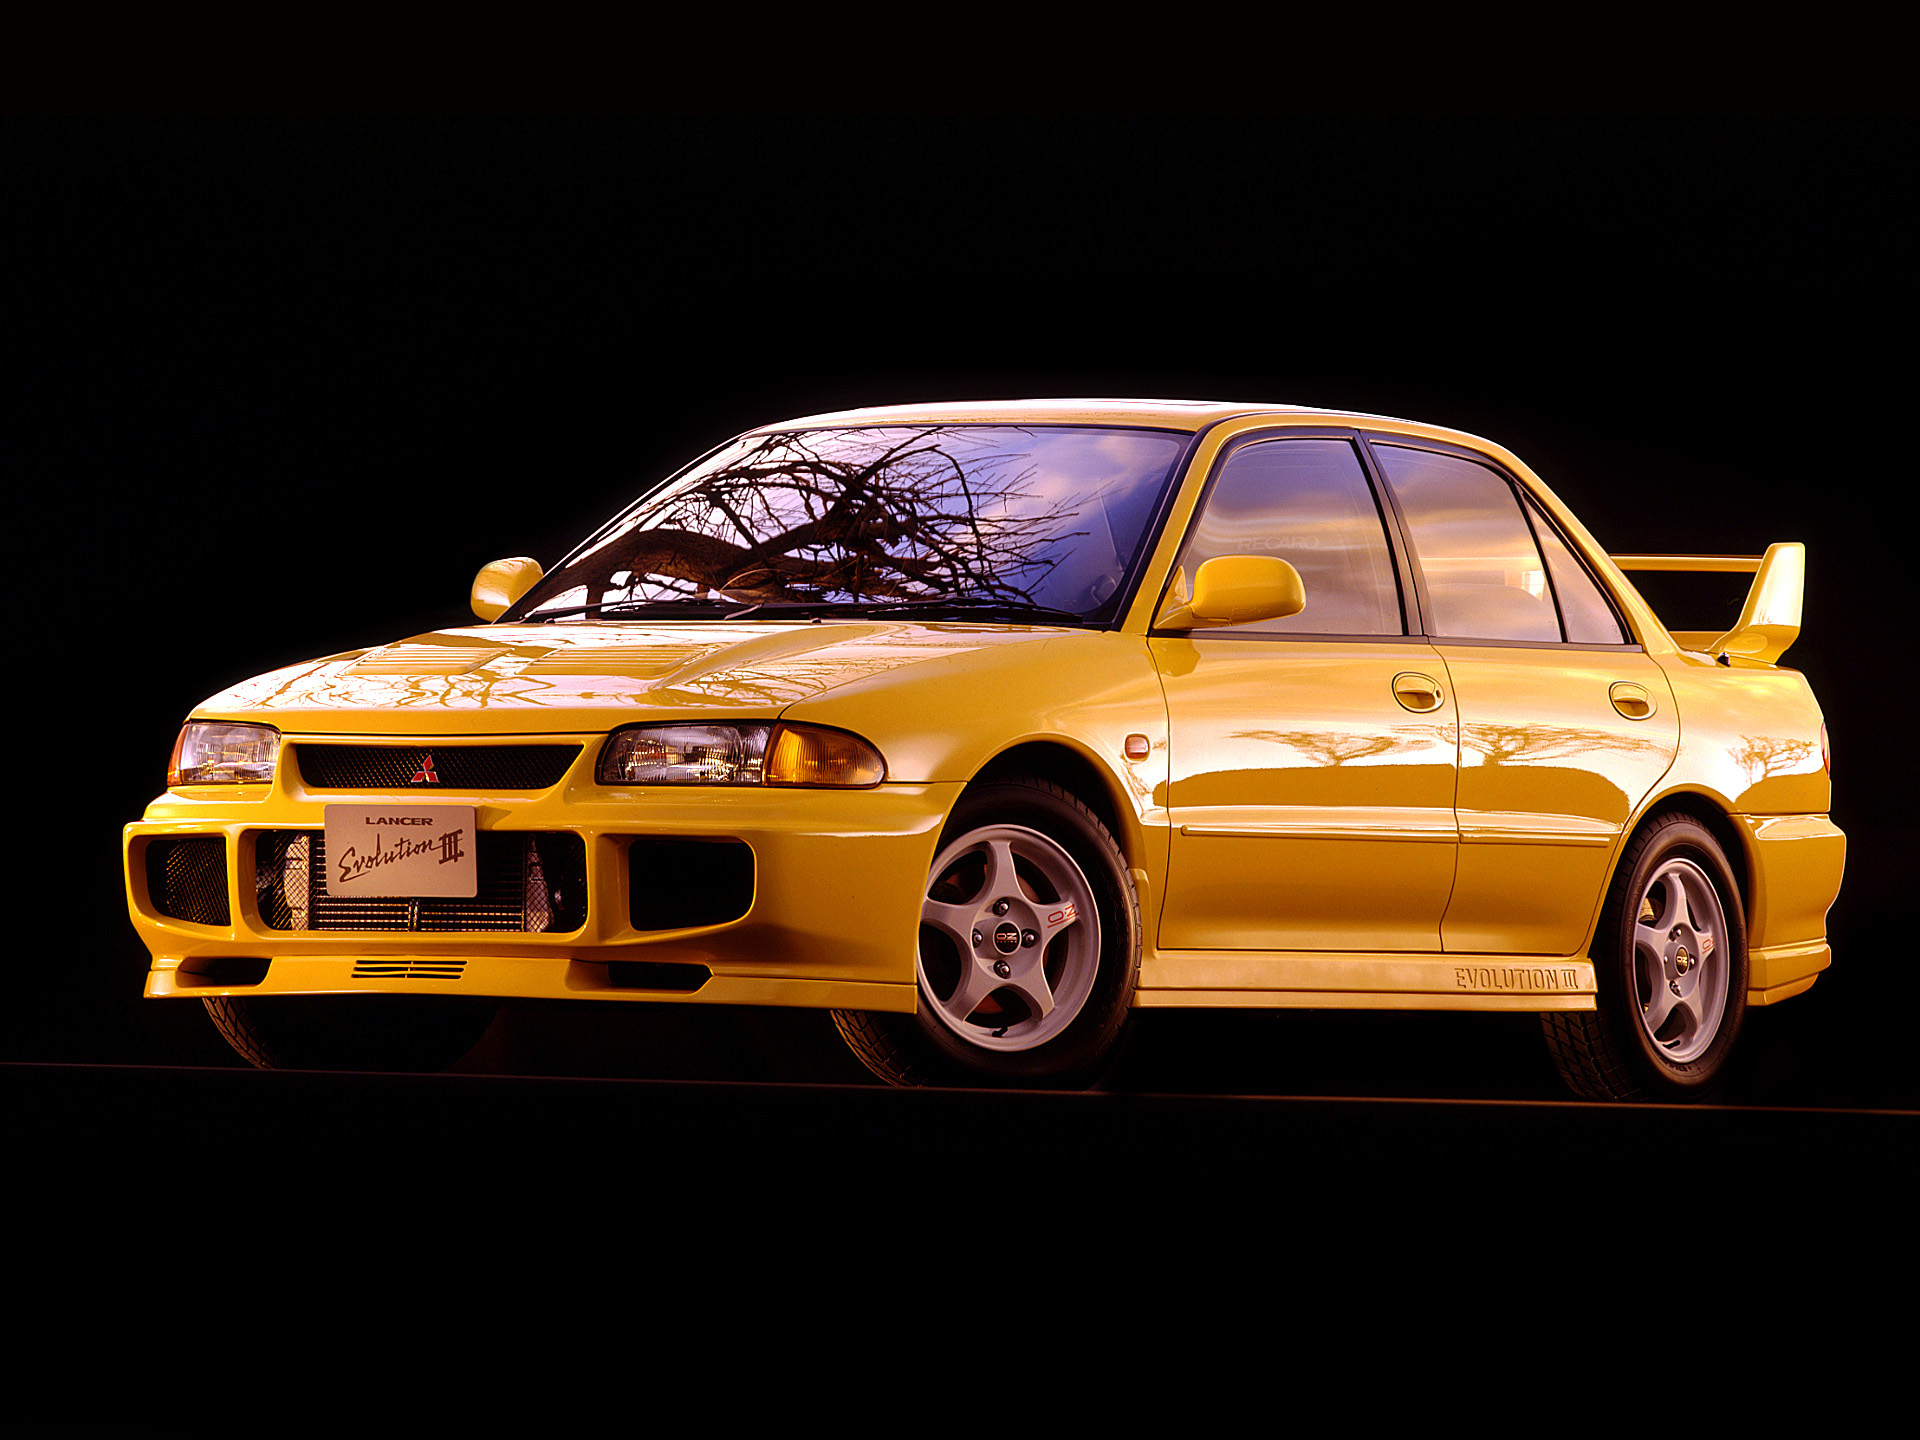  1995 Mitsubishi Lancer GSR Evolution III Wallpaper.